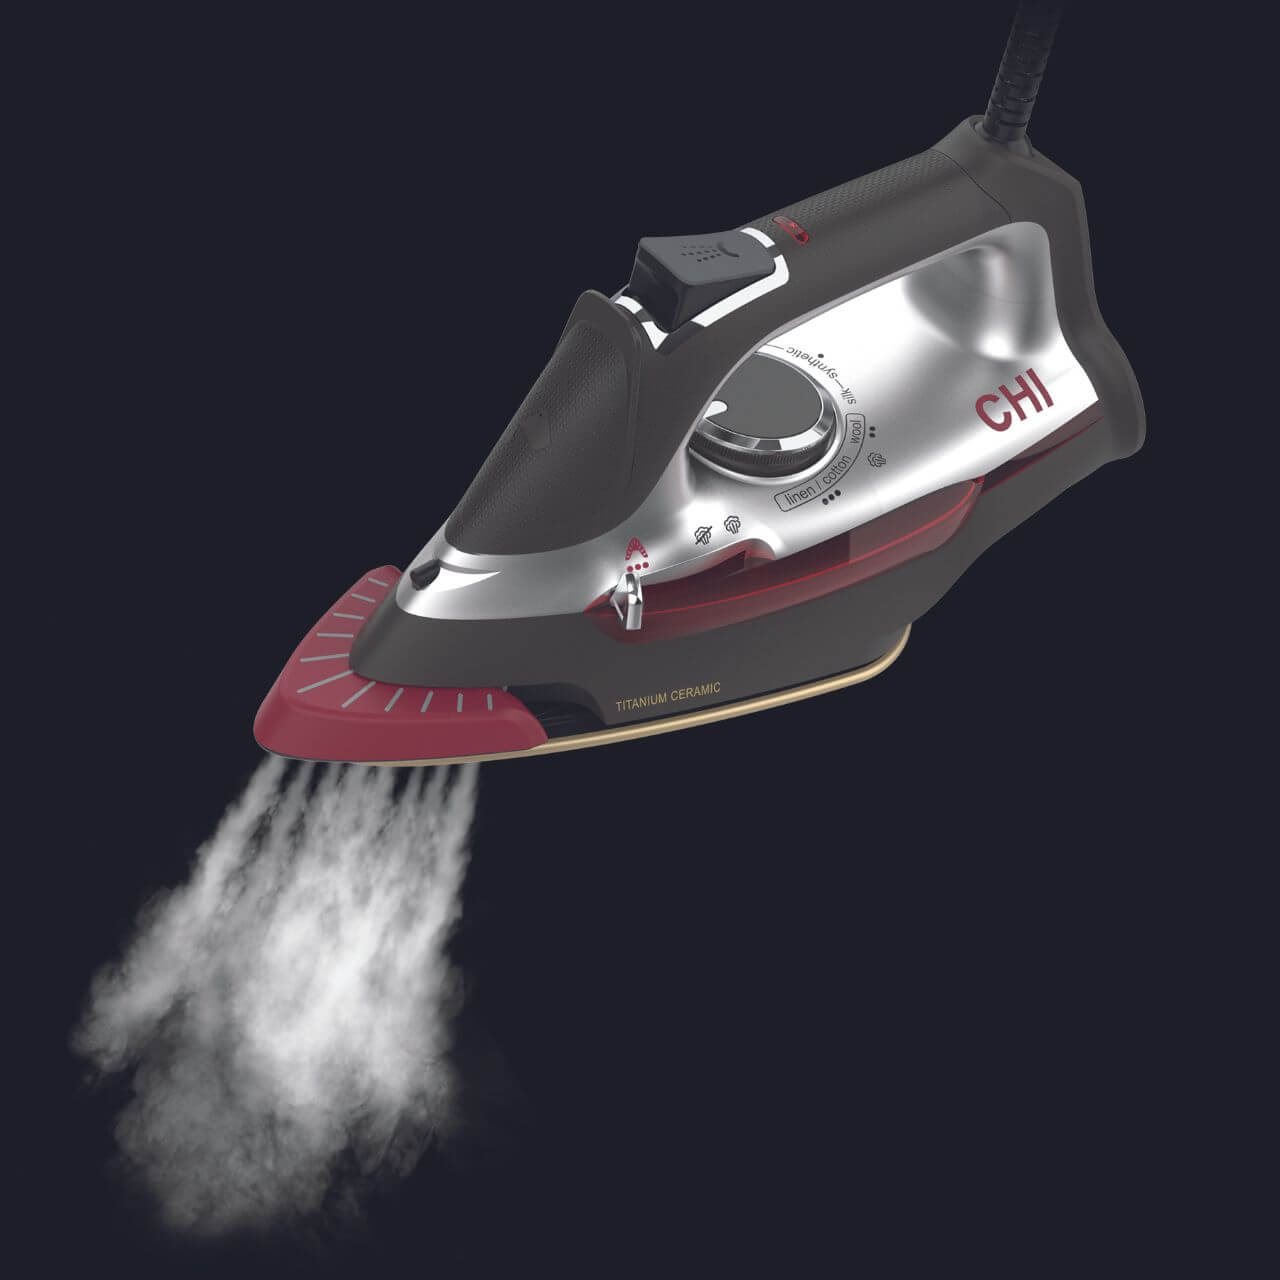 CHI Steam - Plancha de vapor para ropa